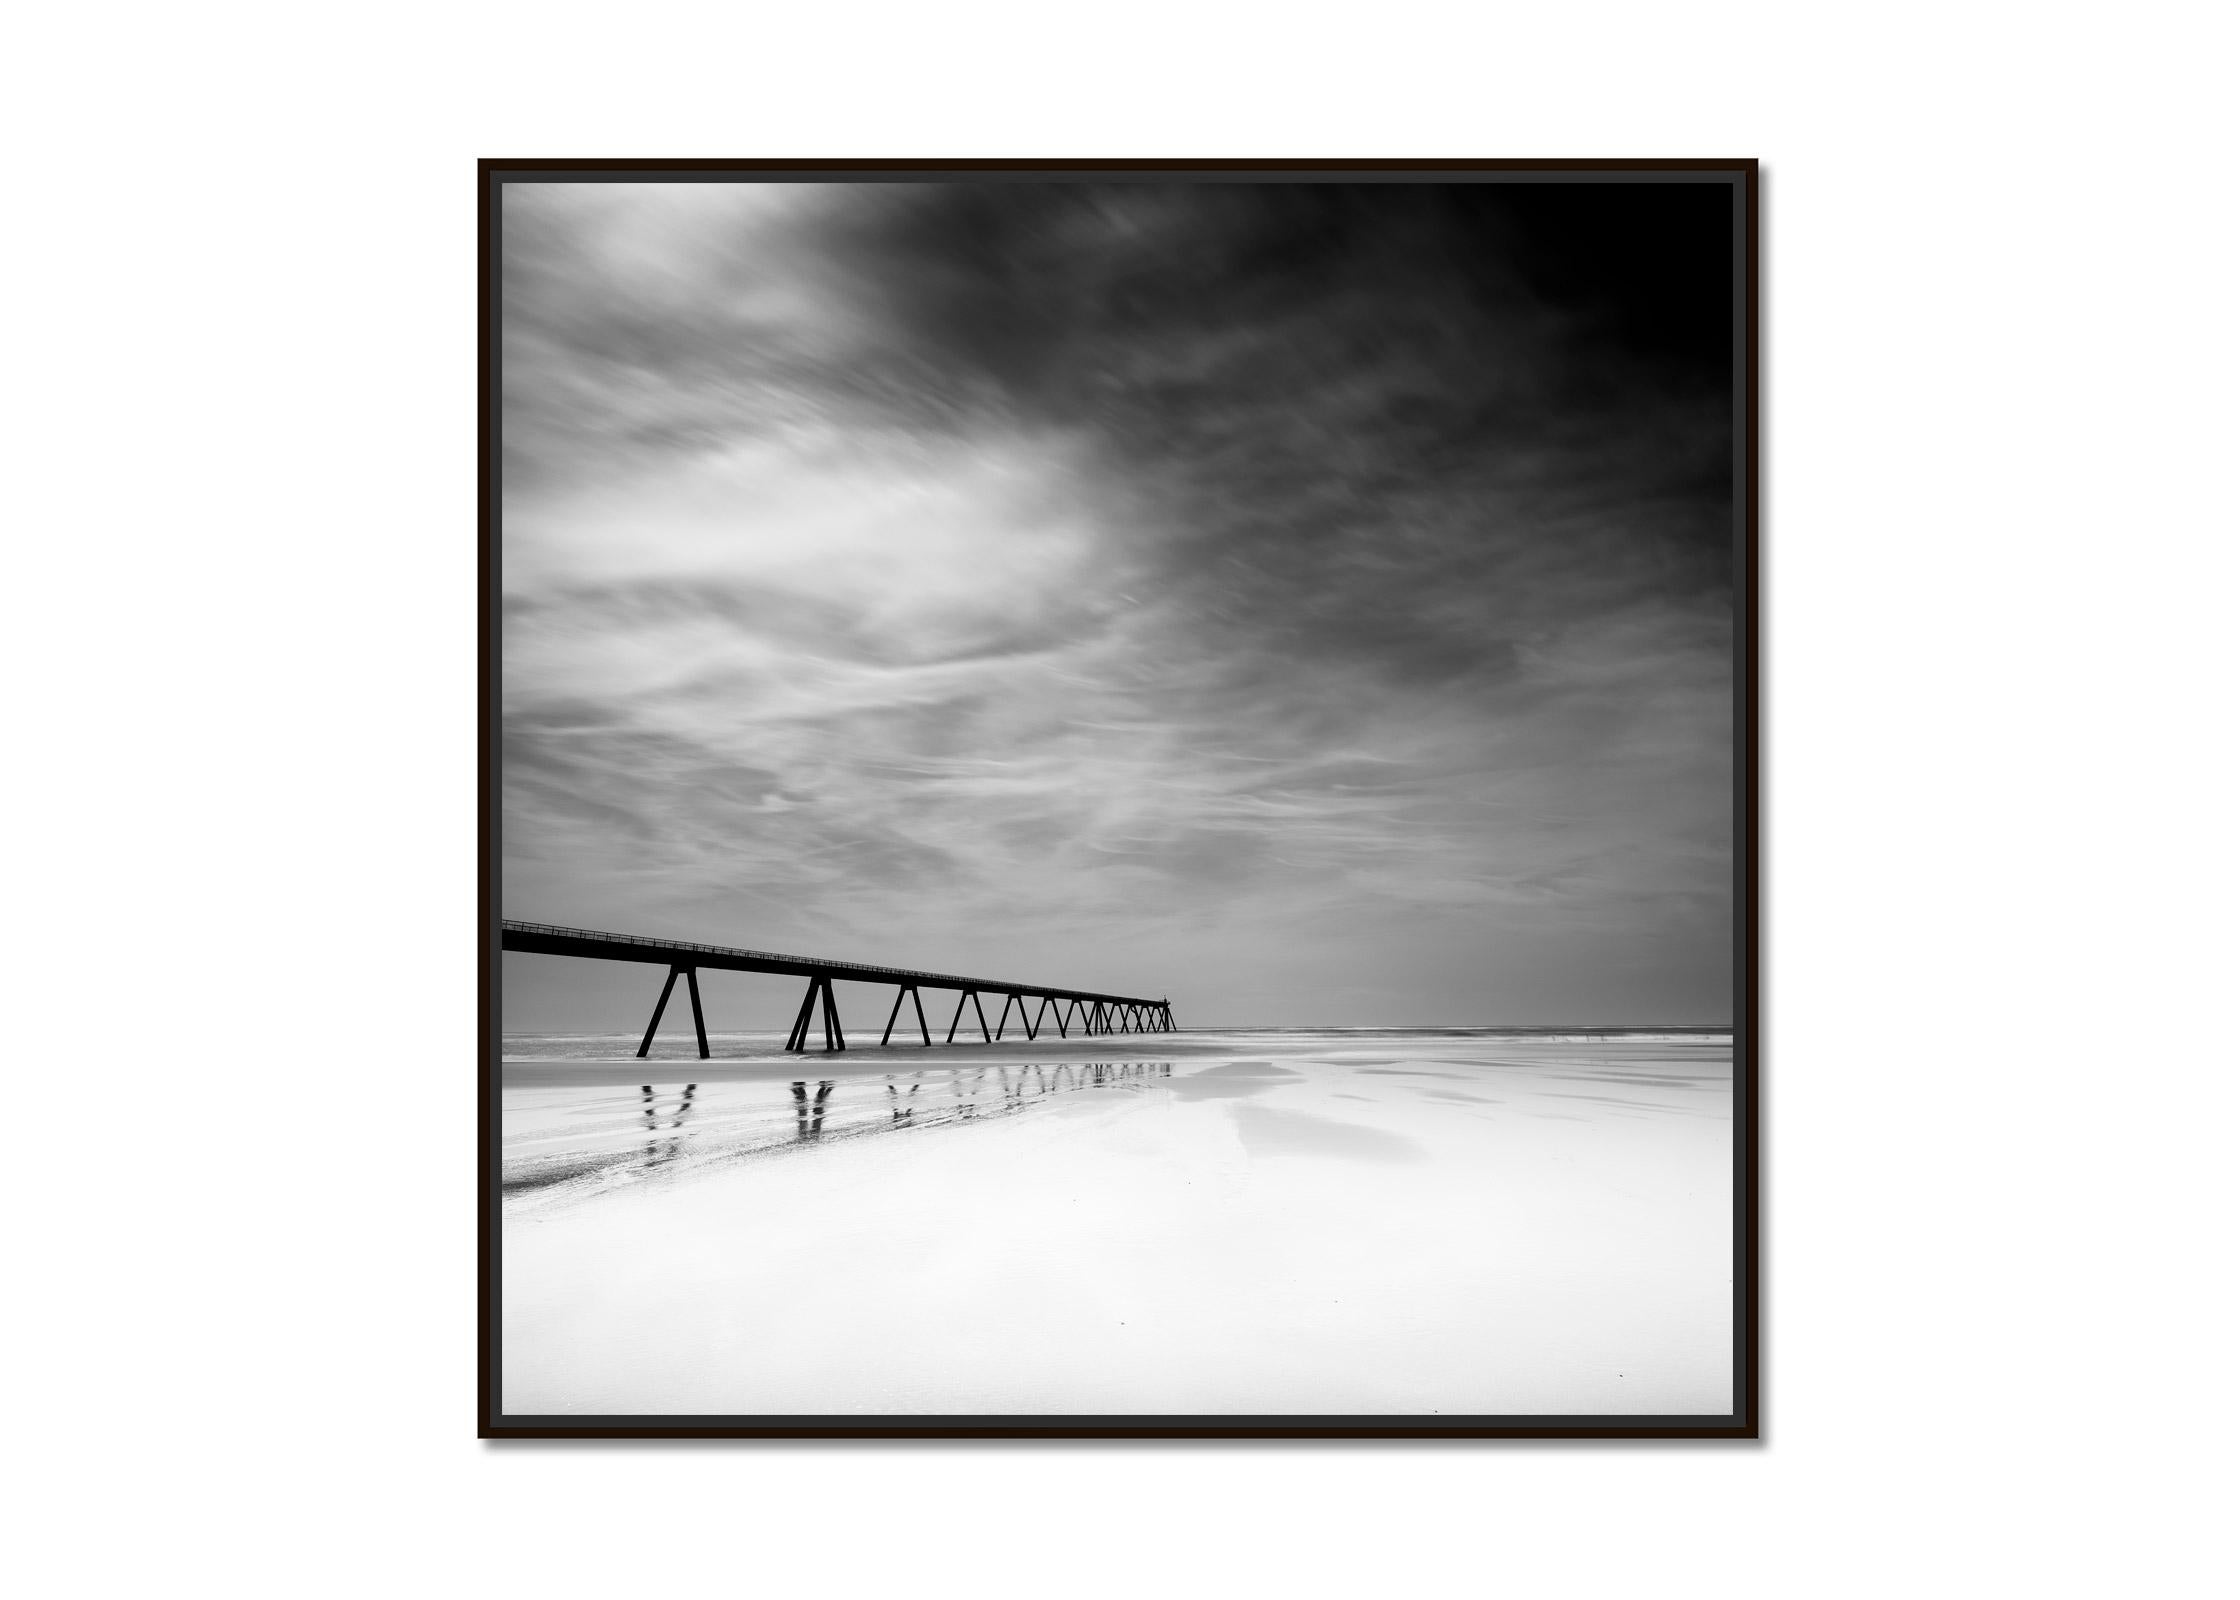 Wharf de la Salie, deserted beach, France, black and white landscape photography - Photograph by Gerald Berghammer